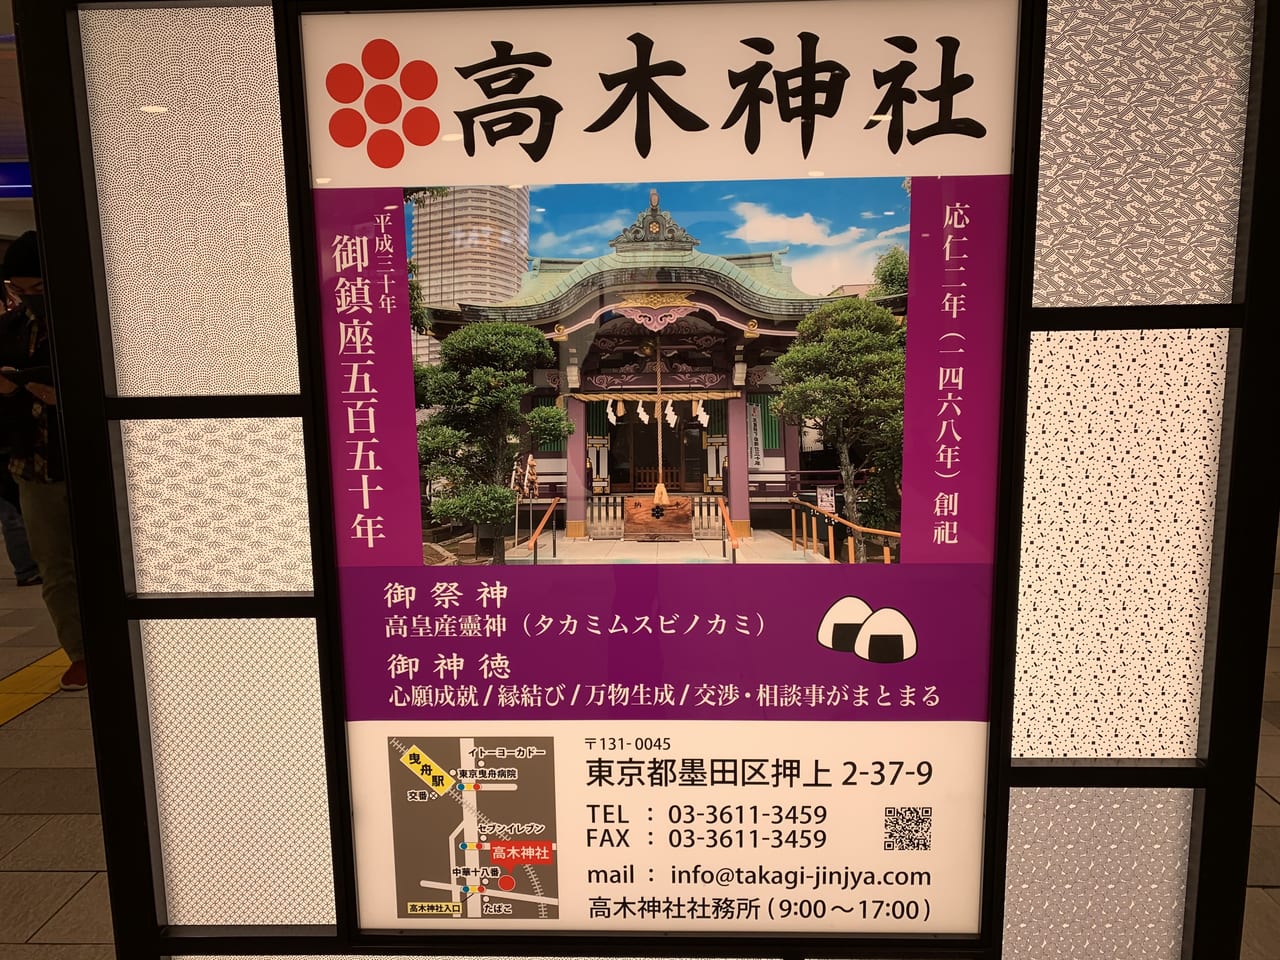 曳舟駅の高木神社広告